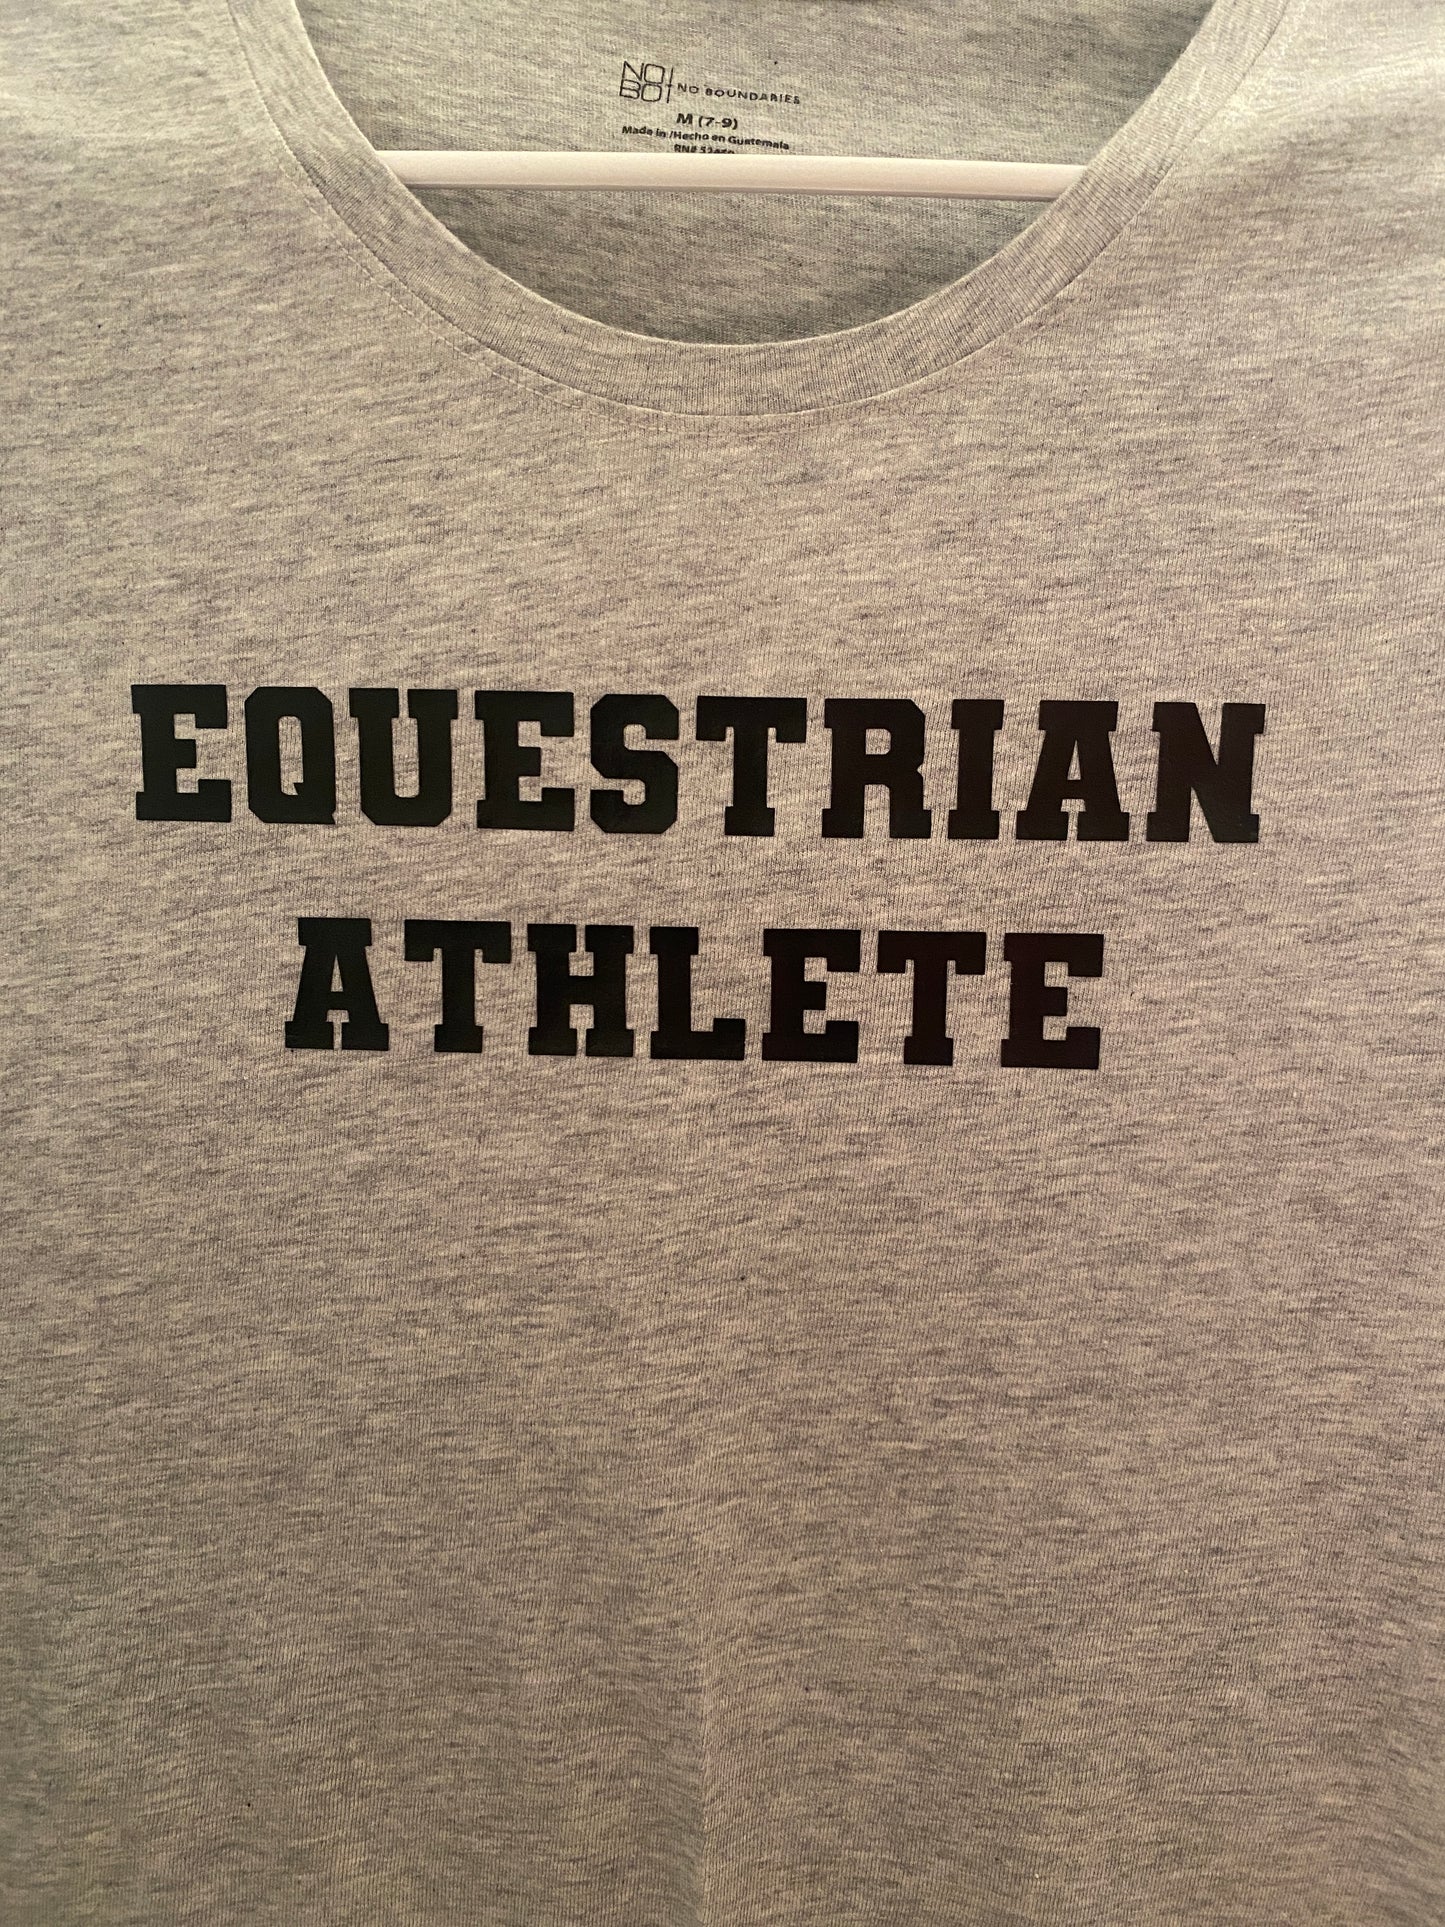 Equestrian Athlete Tee